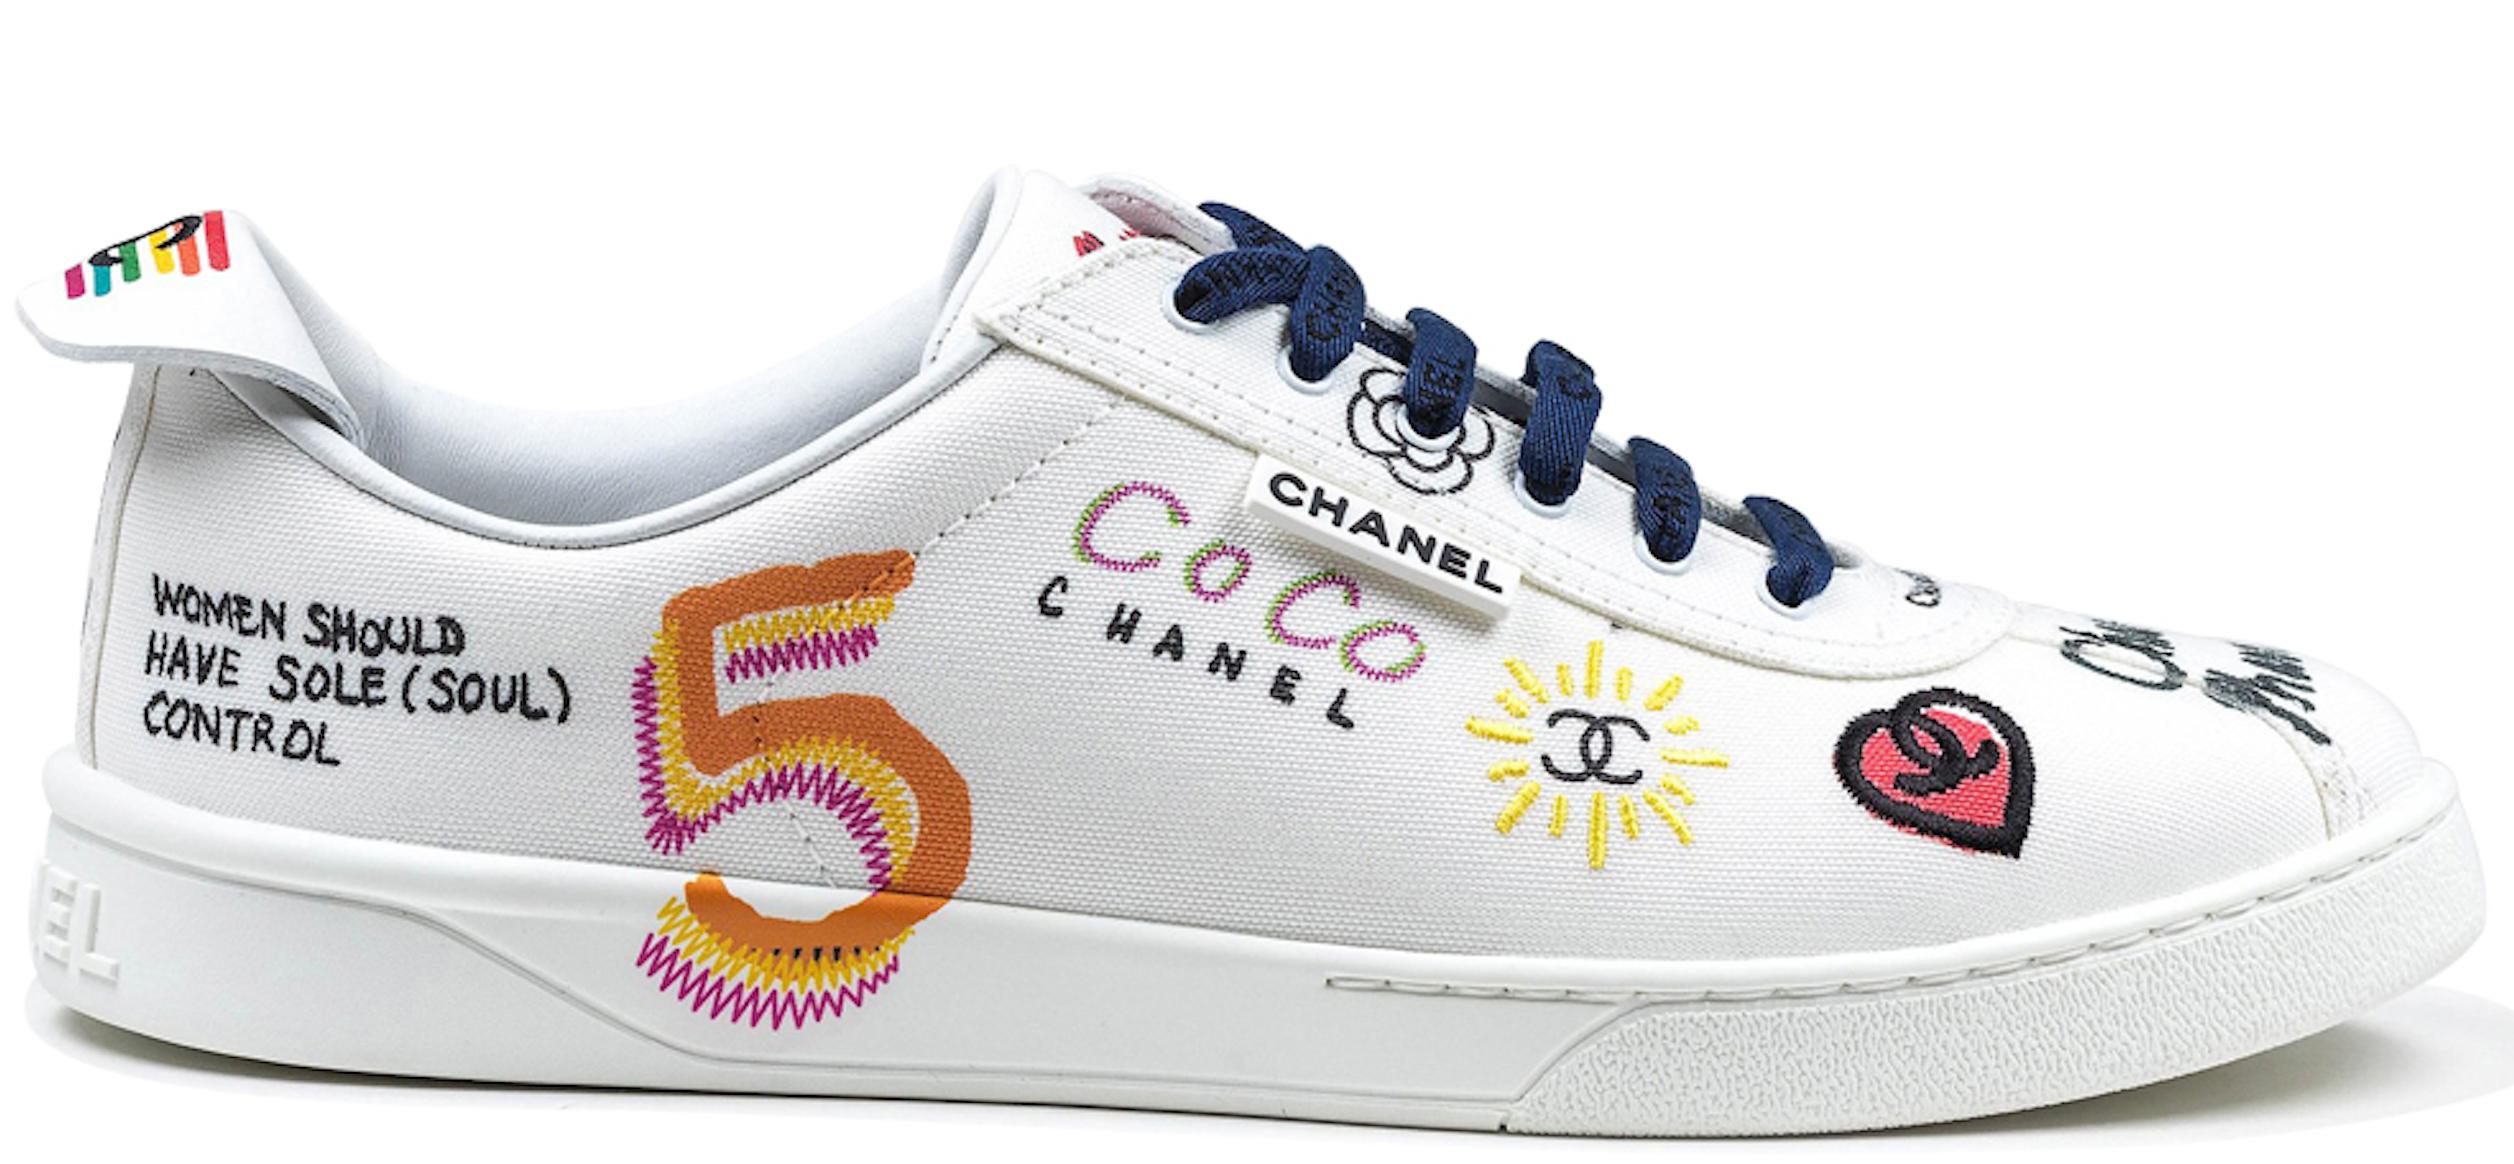 Chanel x pharrell - Gem